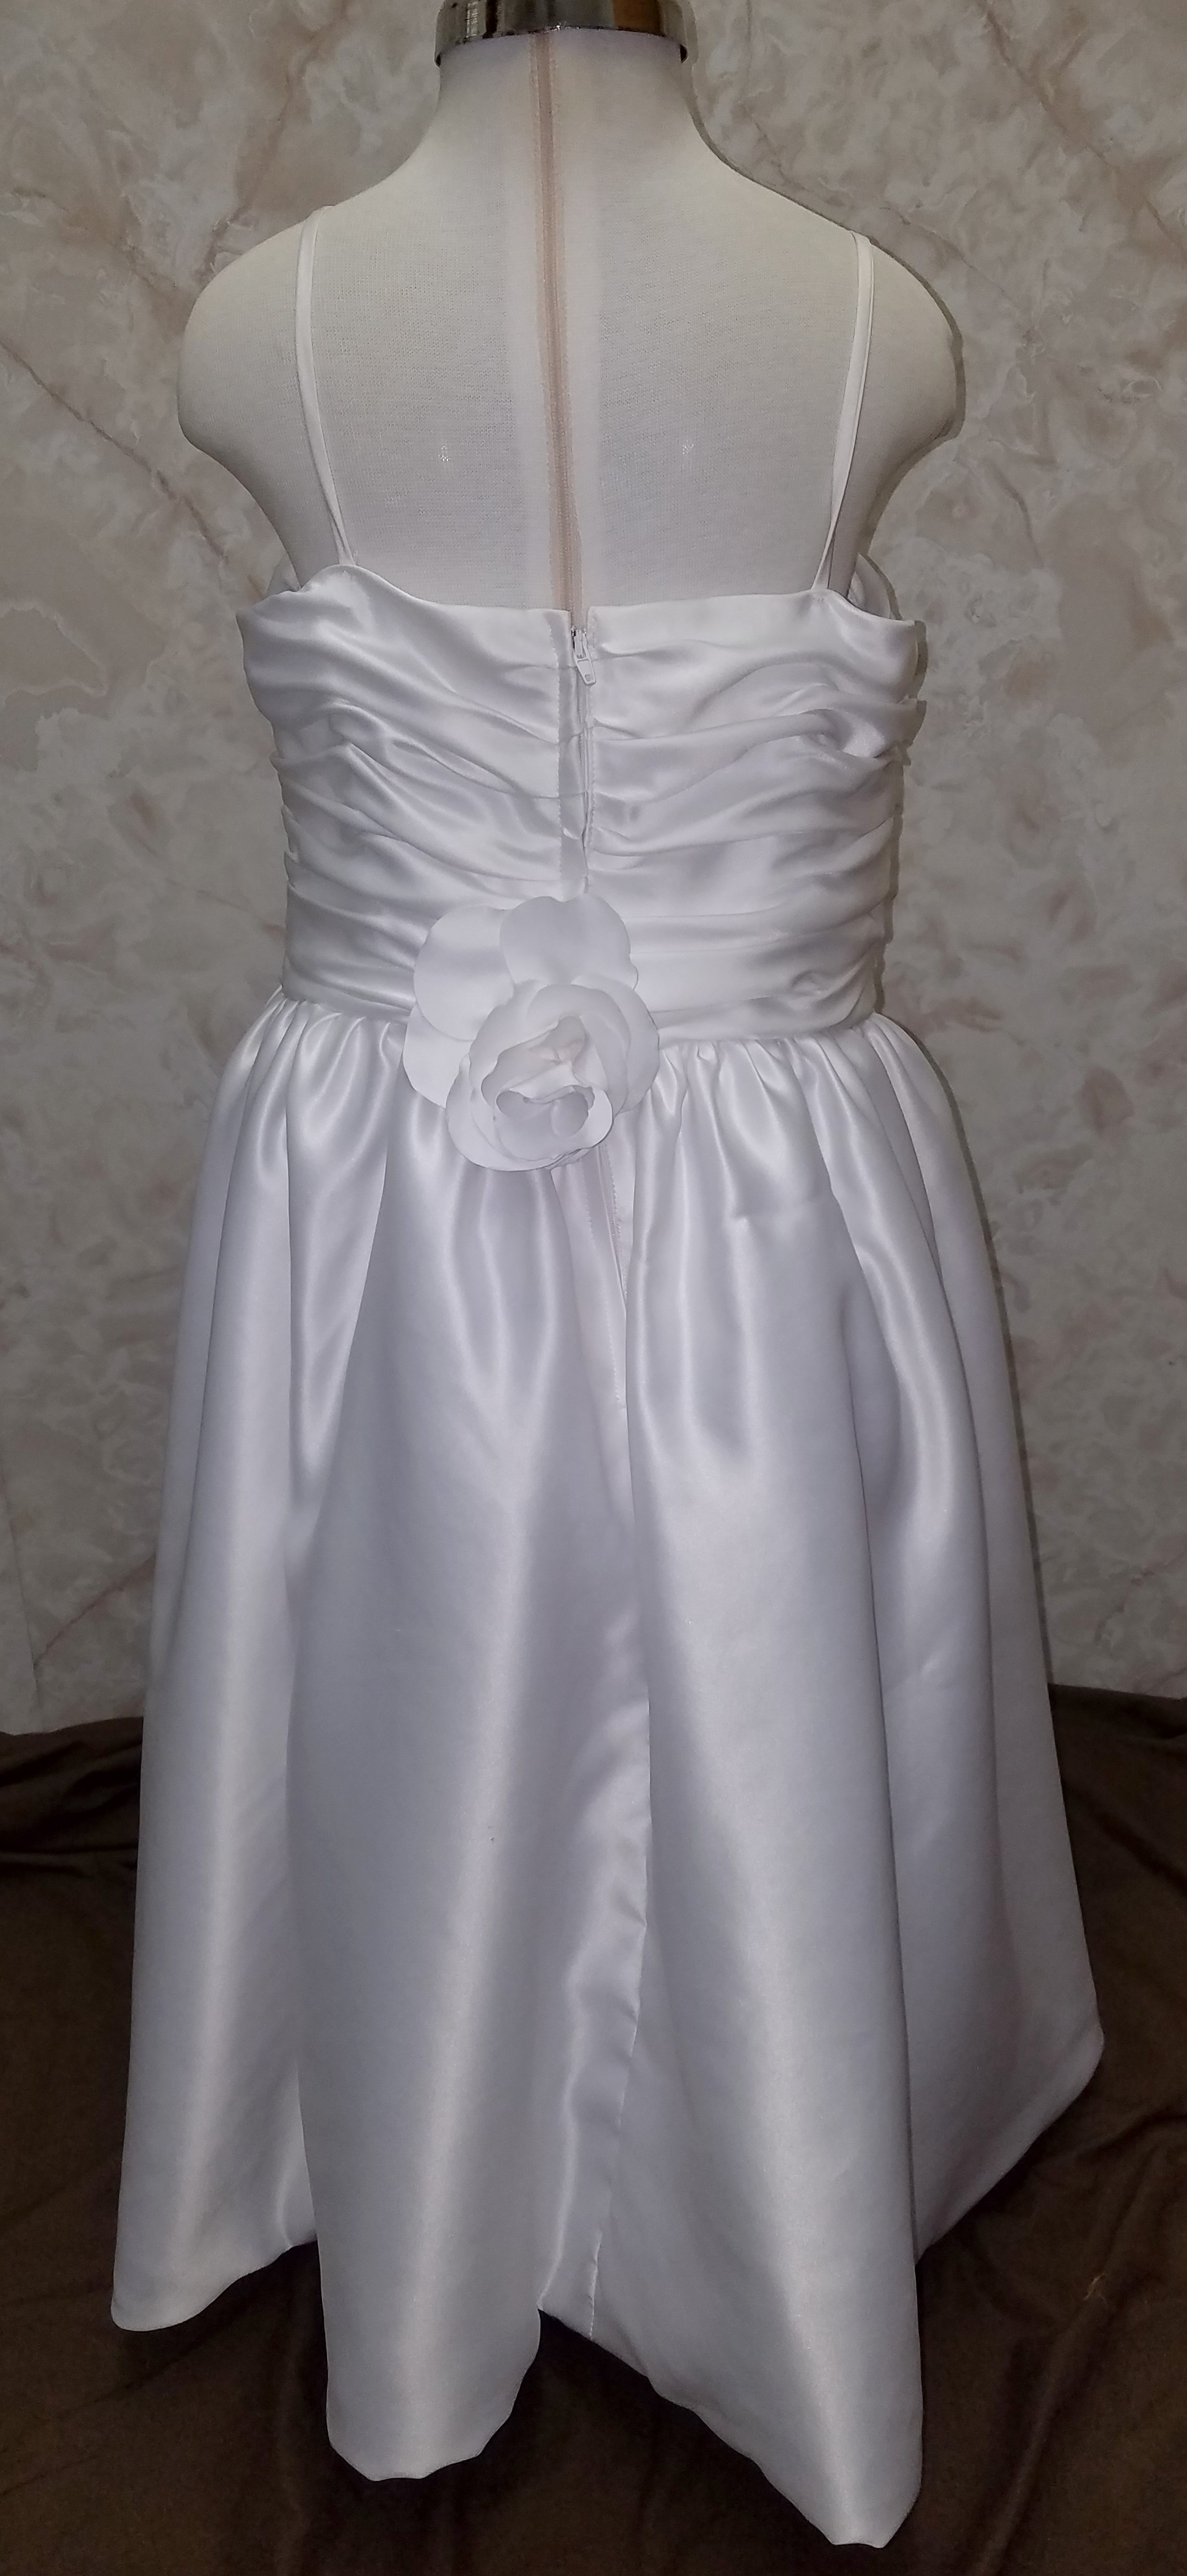 satin white dress size 5